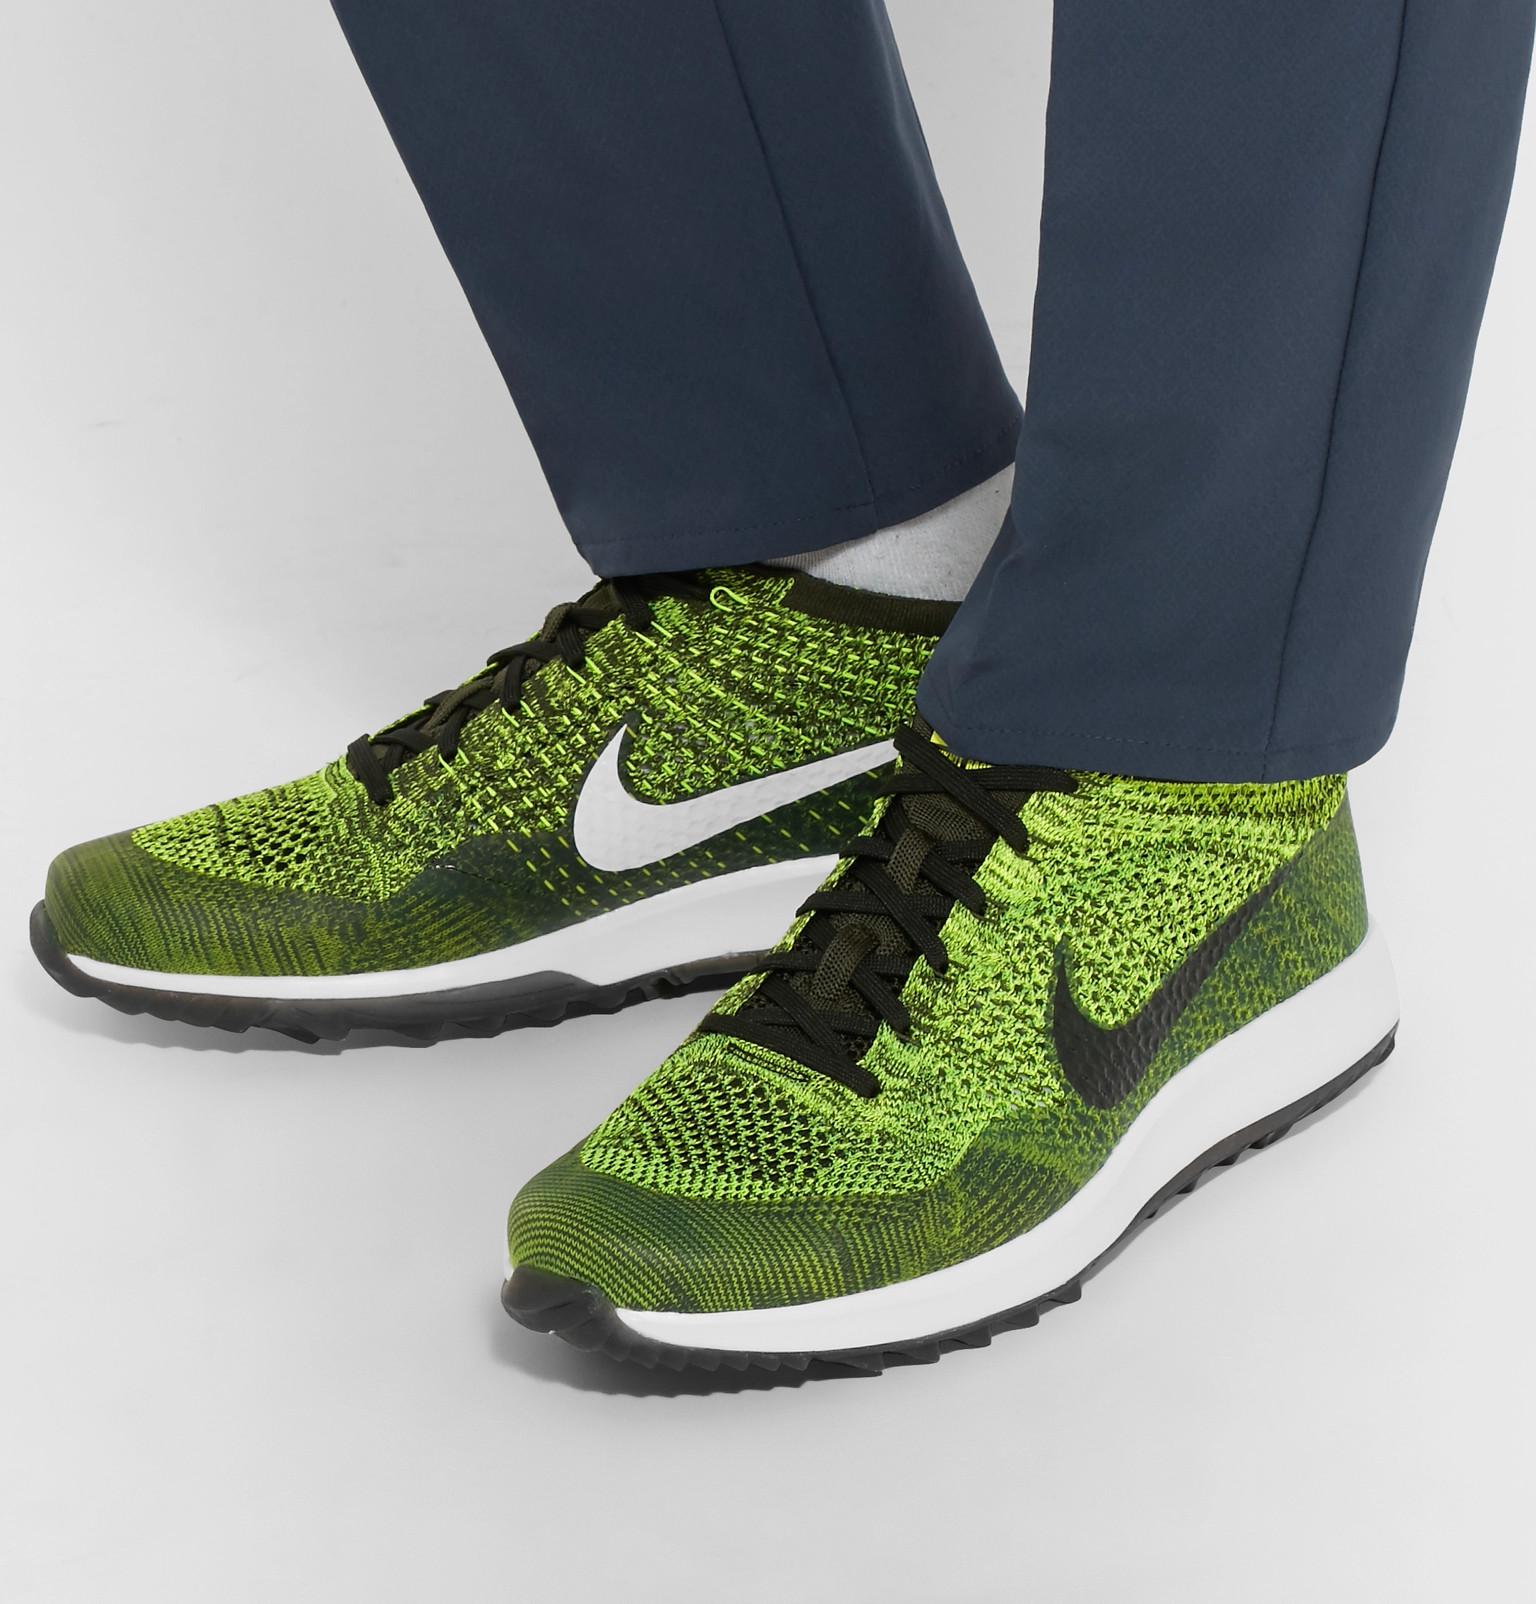 Flyknit Racer Golf Shoes in Green for Men - Lyst